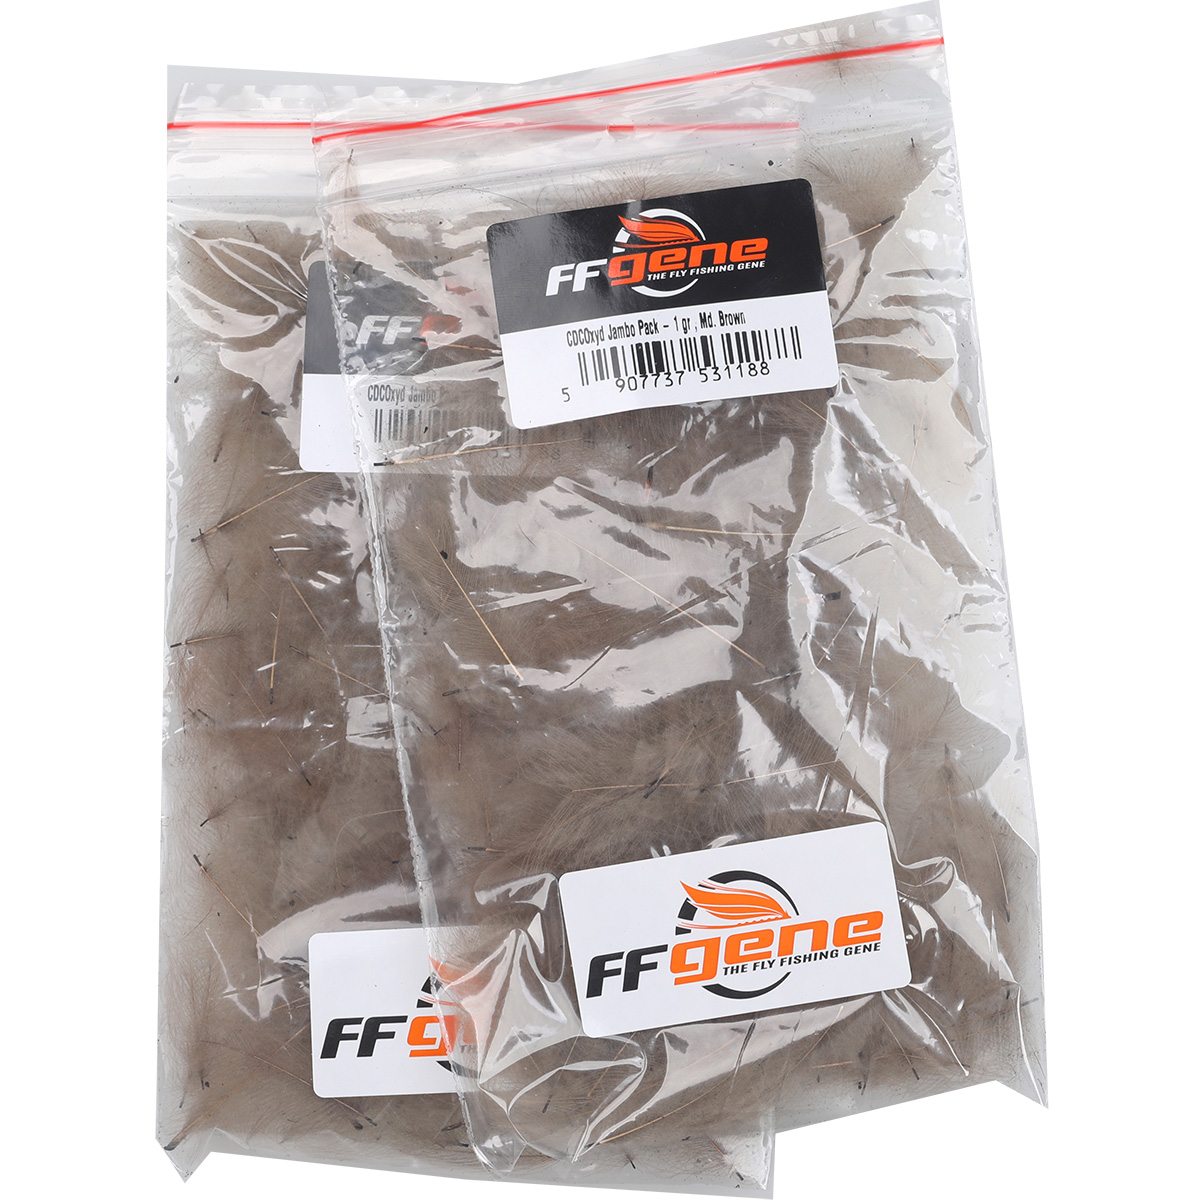 FFGene CDC Oxyd Jambo Pack - 1 gr